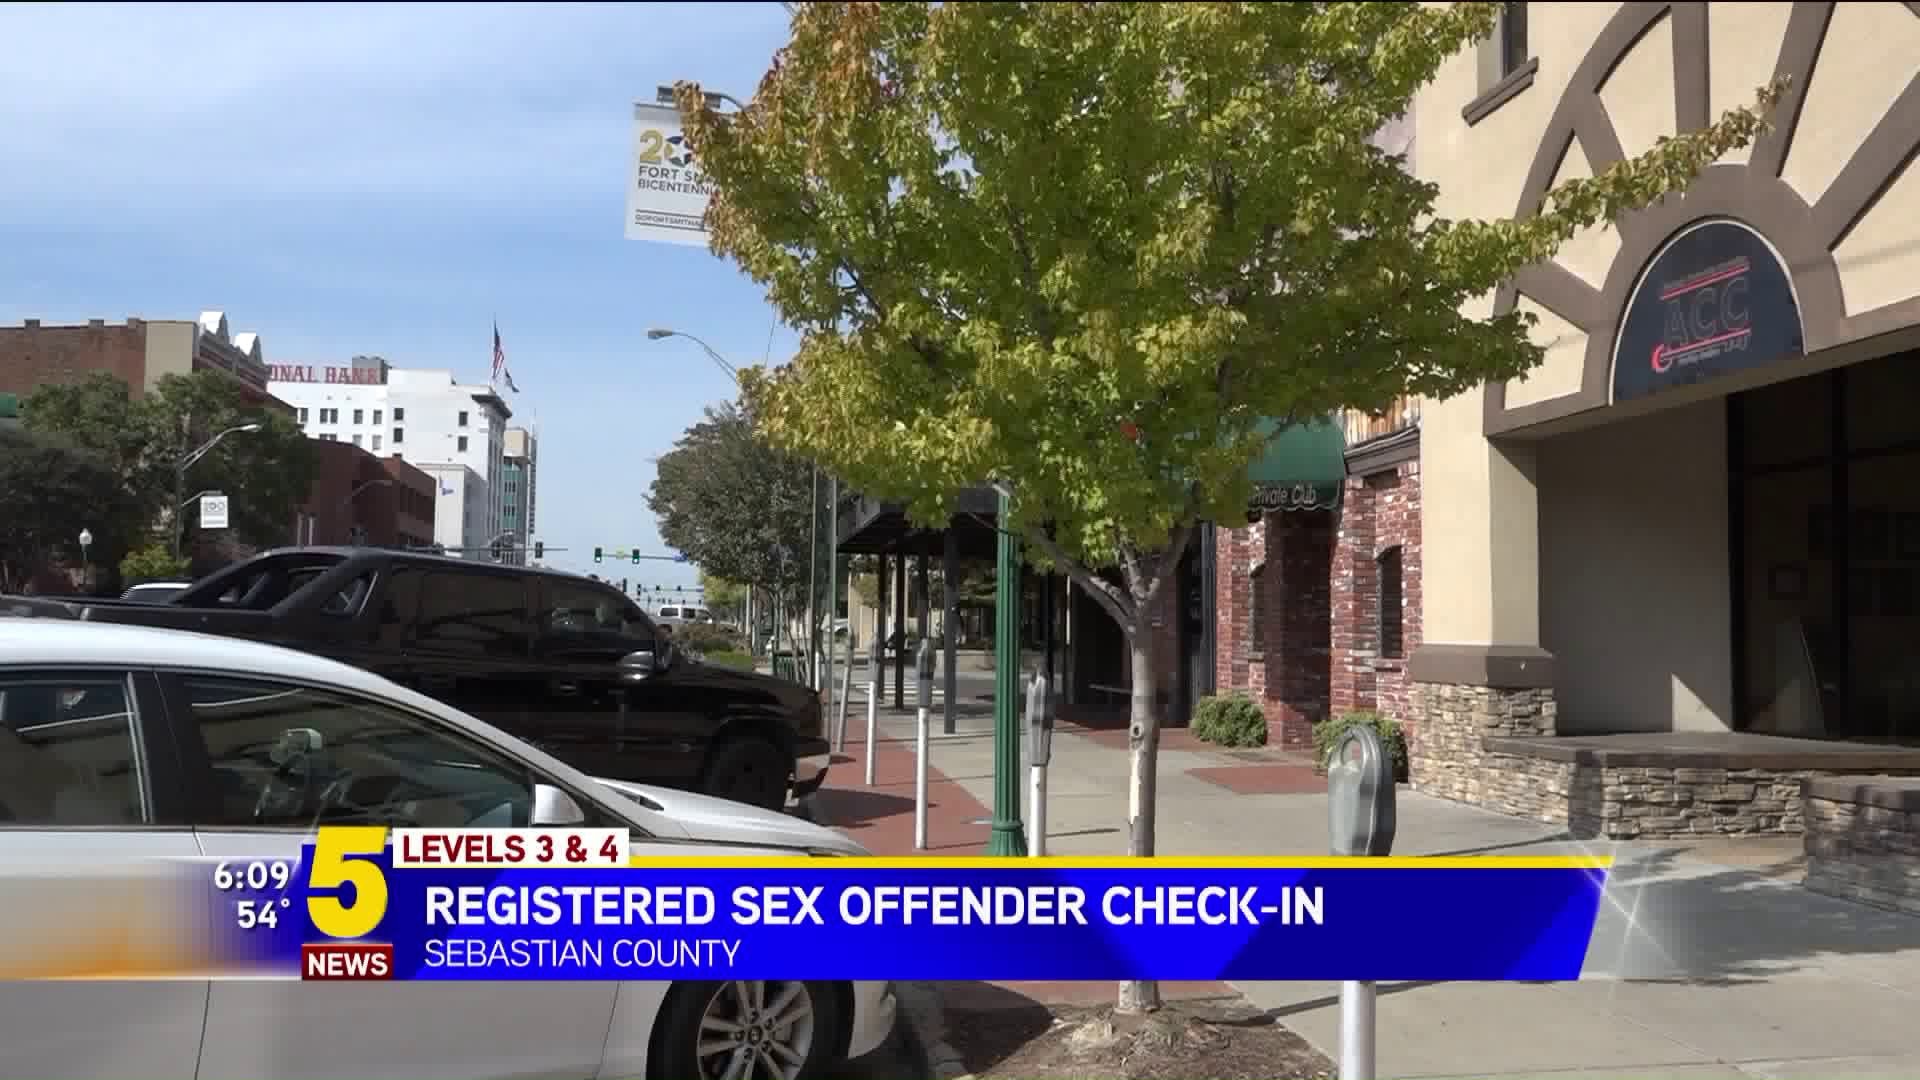 Registered Sex Offender Check-In